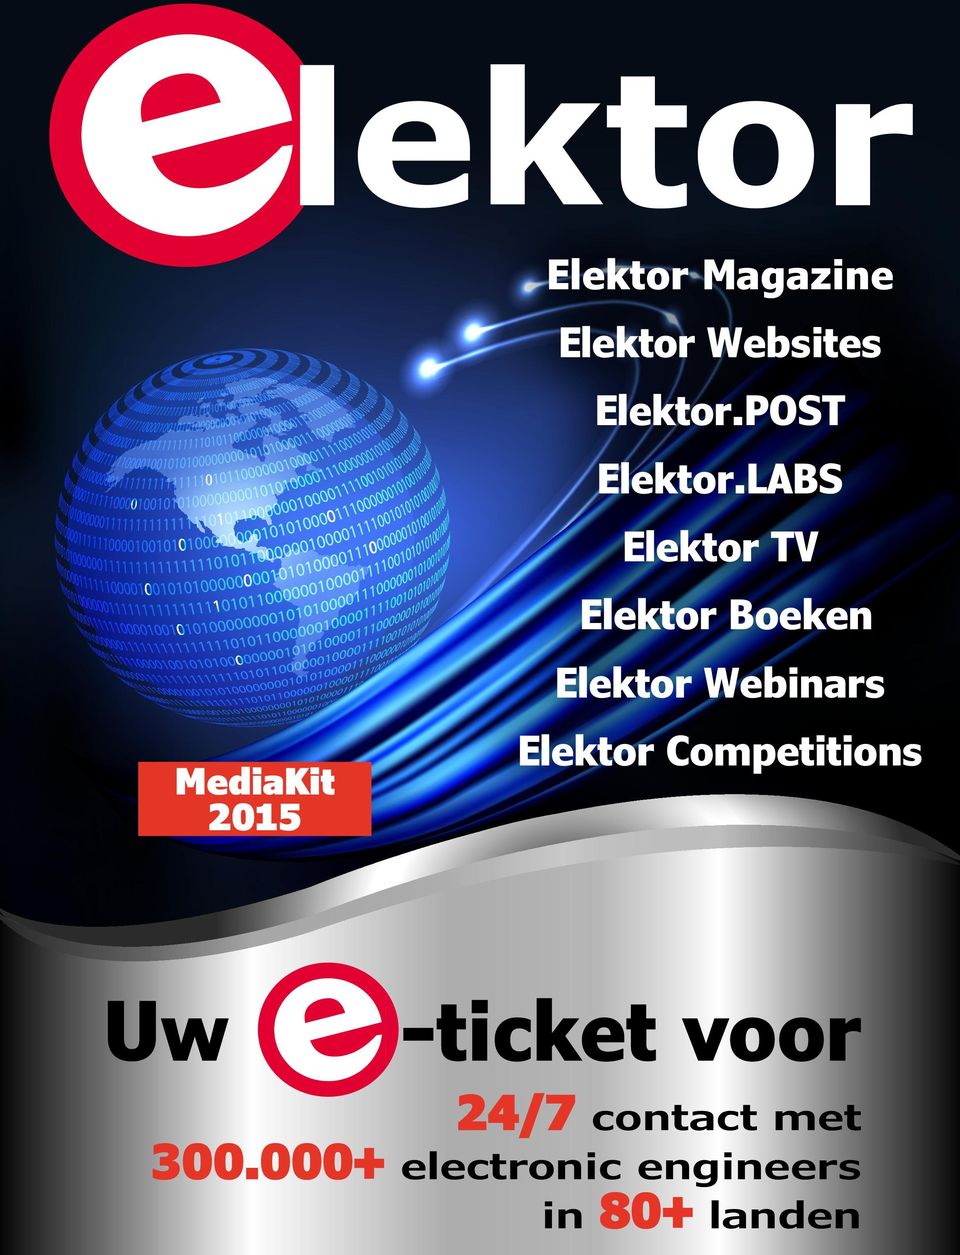 LABS Elektor TV Elektor Boeken Elektor Webinars